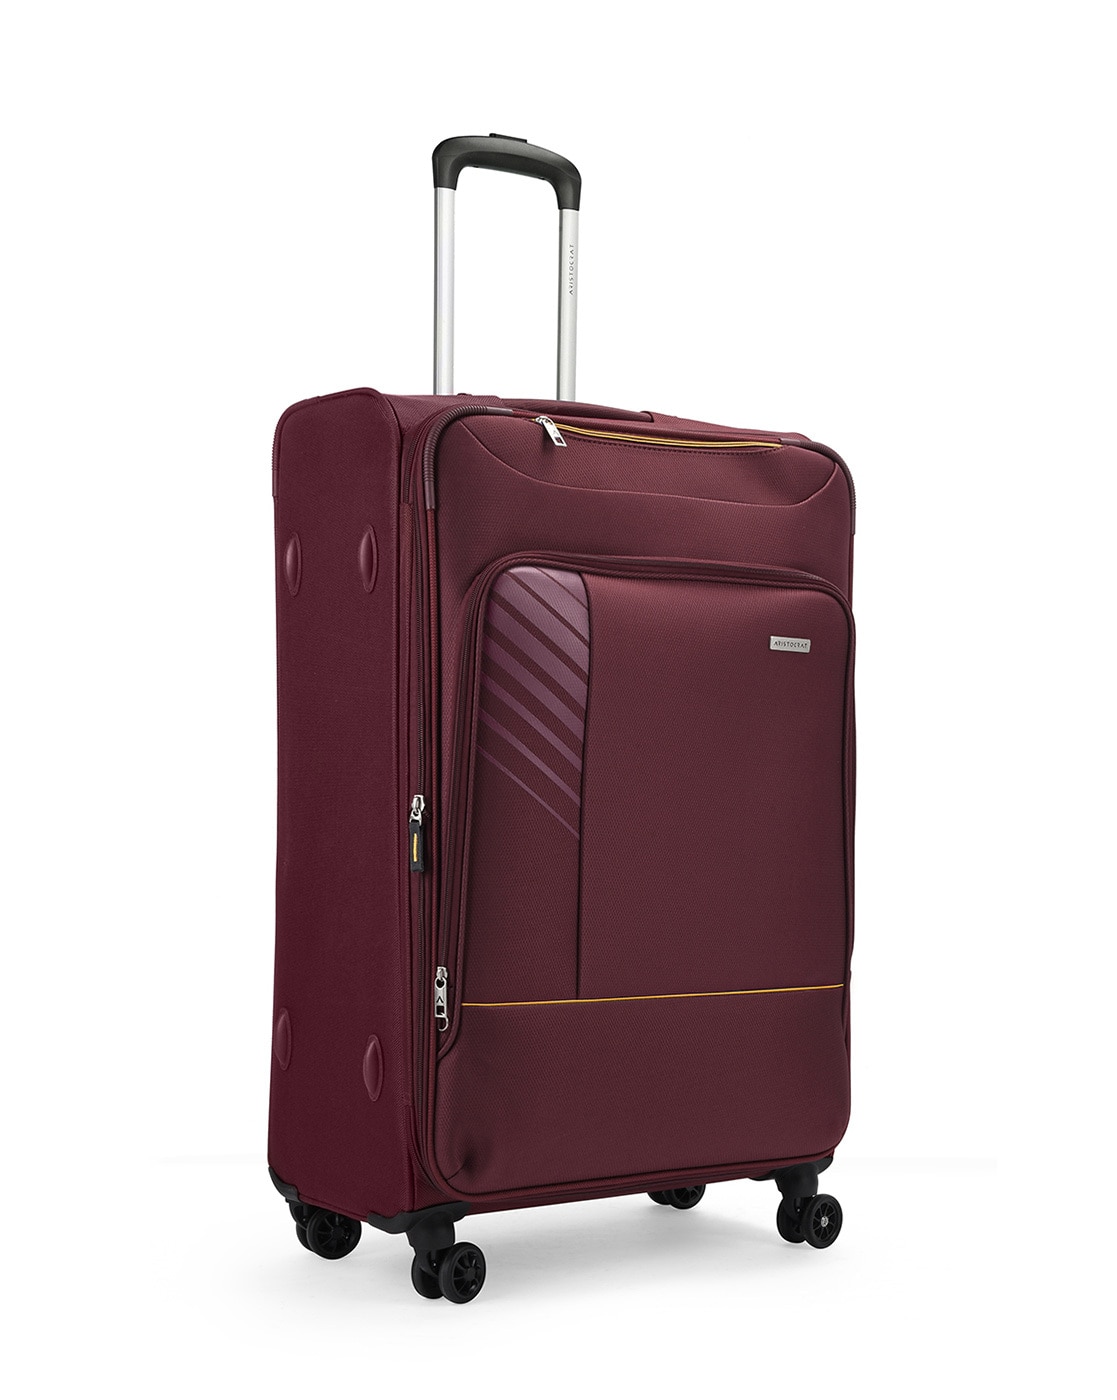 Ventex Aristocrat Trolley Bag, Size: 20.24.28 at Rs 8999/set in Vadodara |  ID: 23349901862